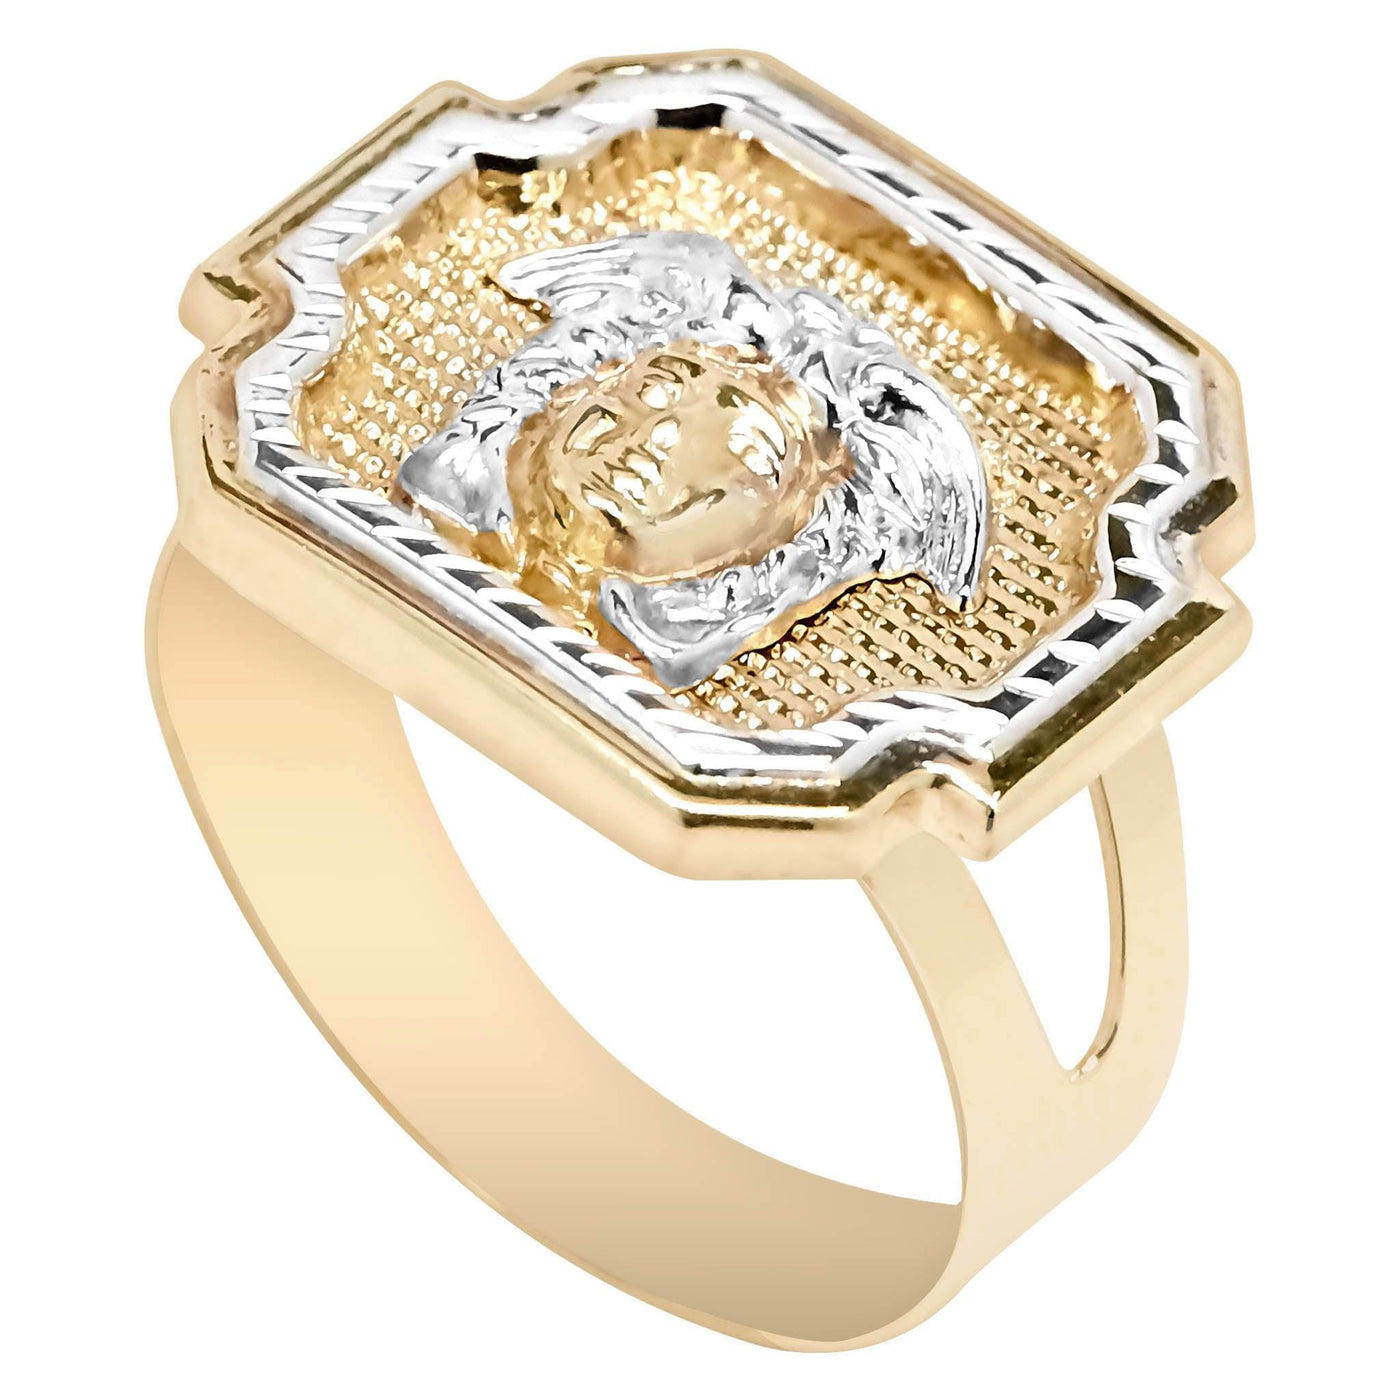 Men's Medusa Two-Tone Ring 10K Yellow Gold Size 10 - bayamjewelry